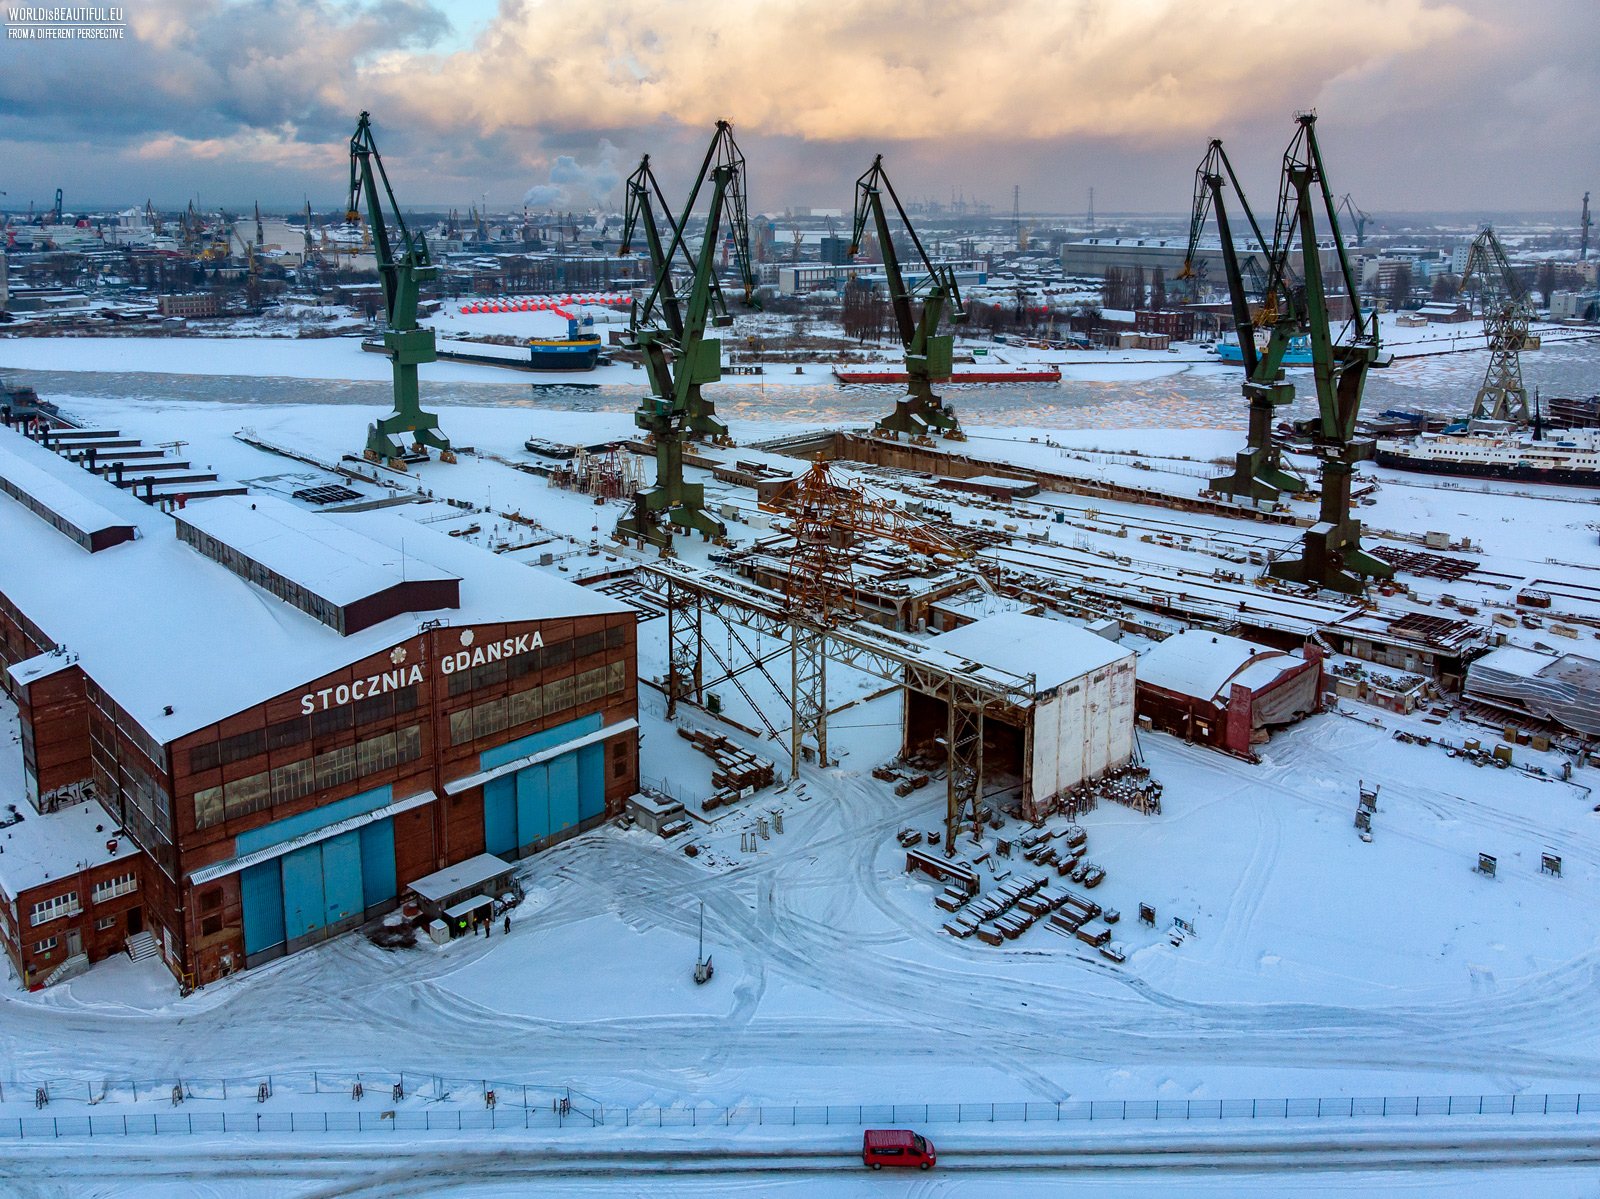 Gdańsk Shipyard in winter